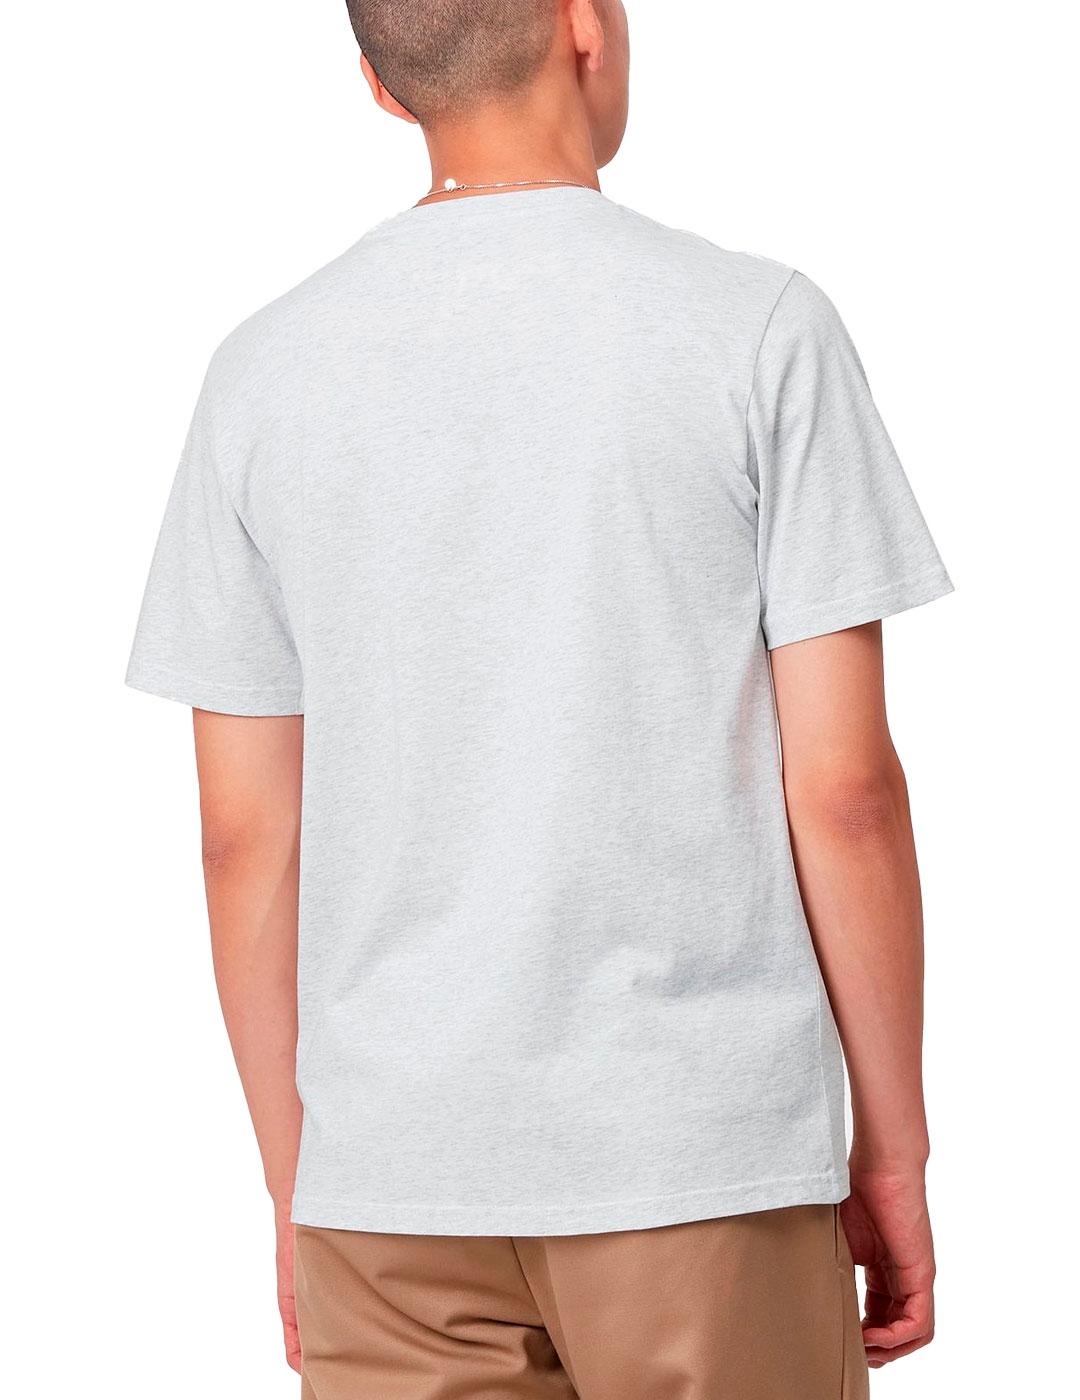 Camiseta Carhartt Pocket Gris